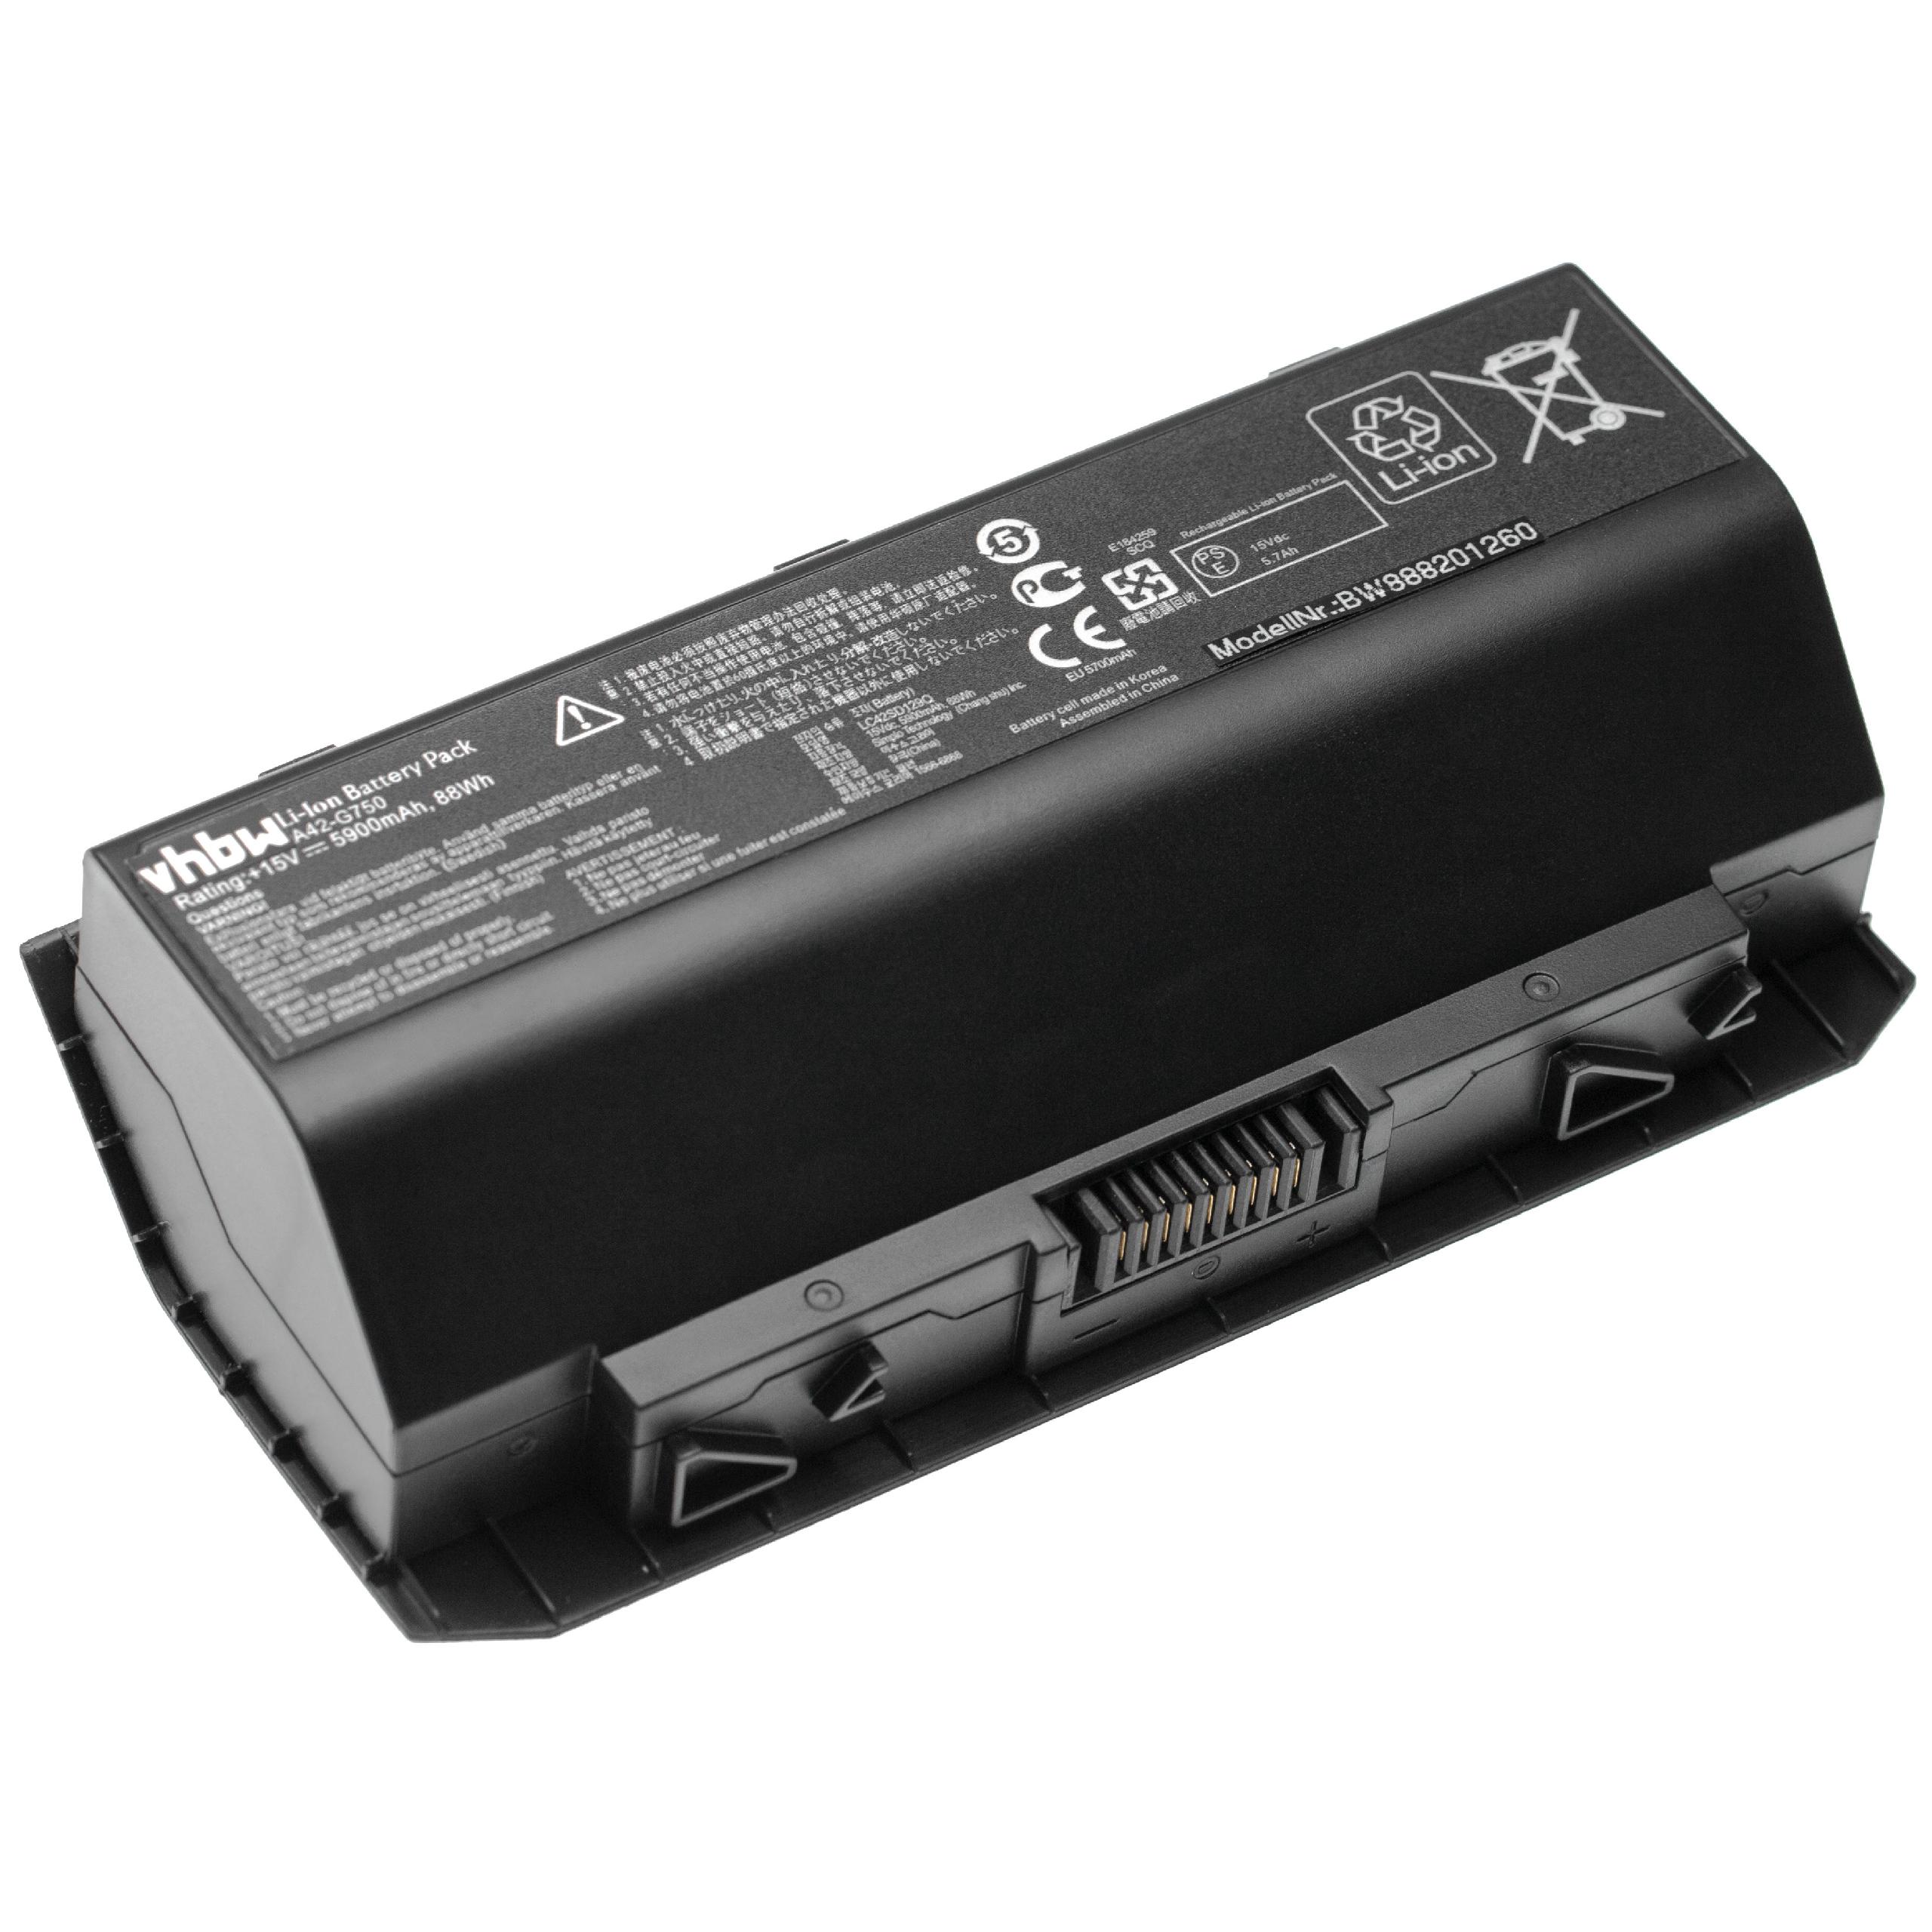 Akumulator do laptopa zamiennik Asus A42-G750 - 5900 mAh 15 V LiPo, czarny